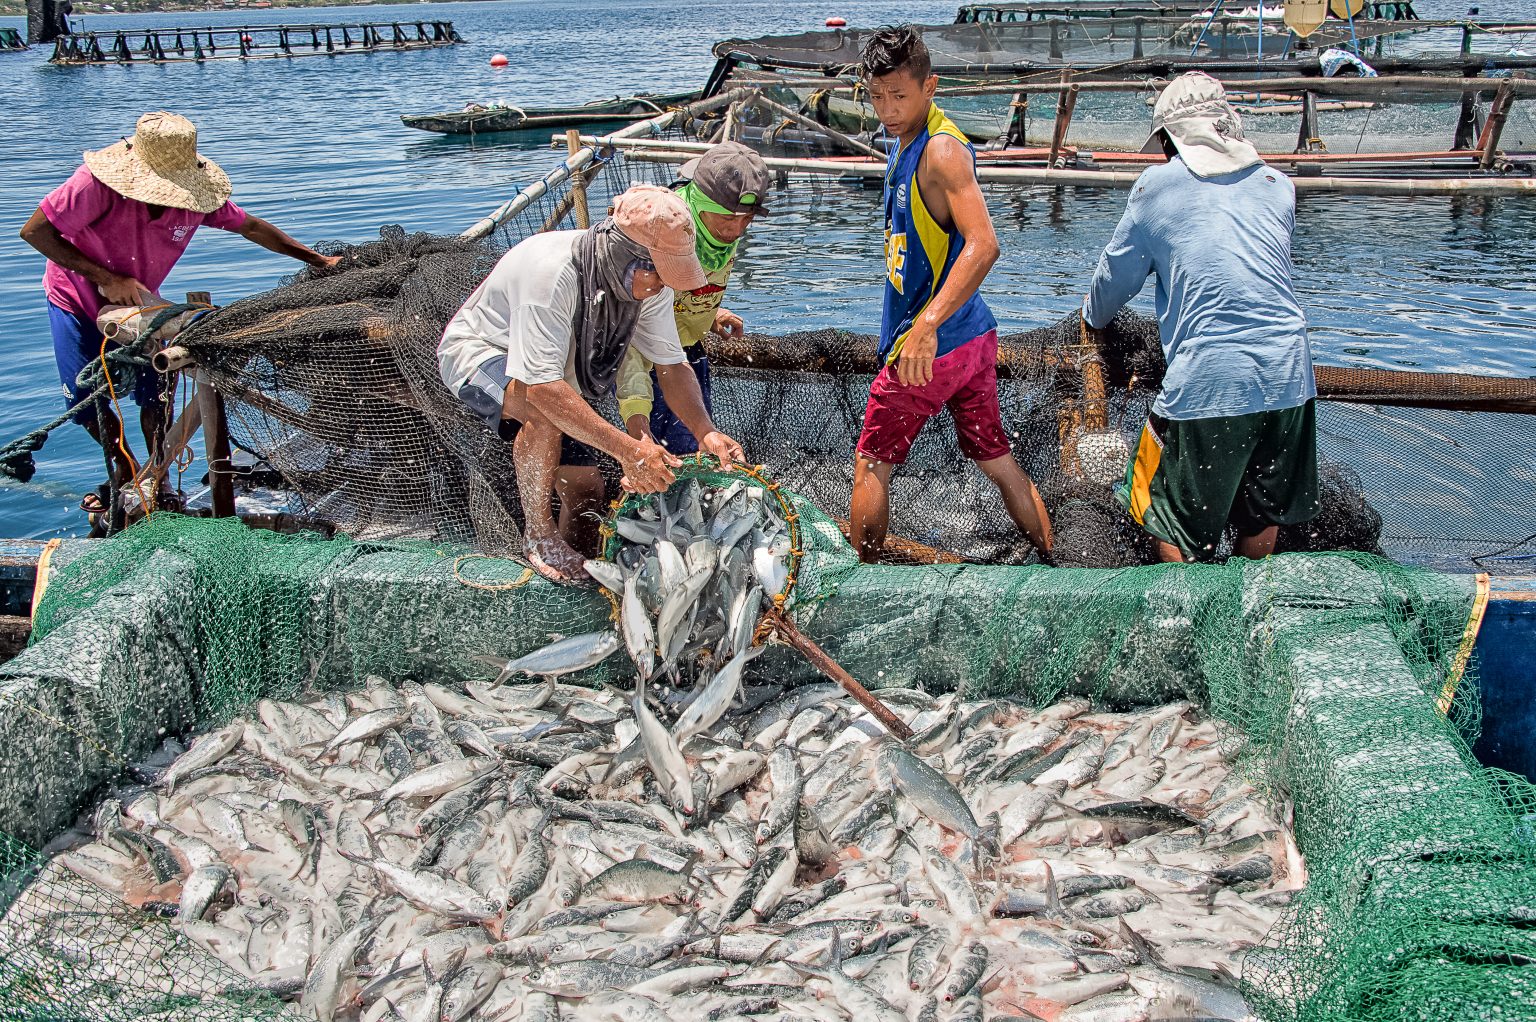 “We have enough fresh fish” — DA Chief